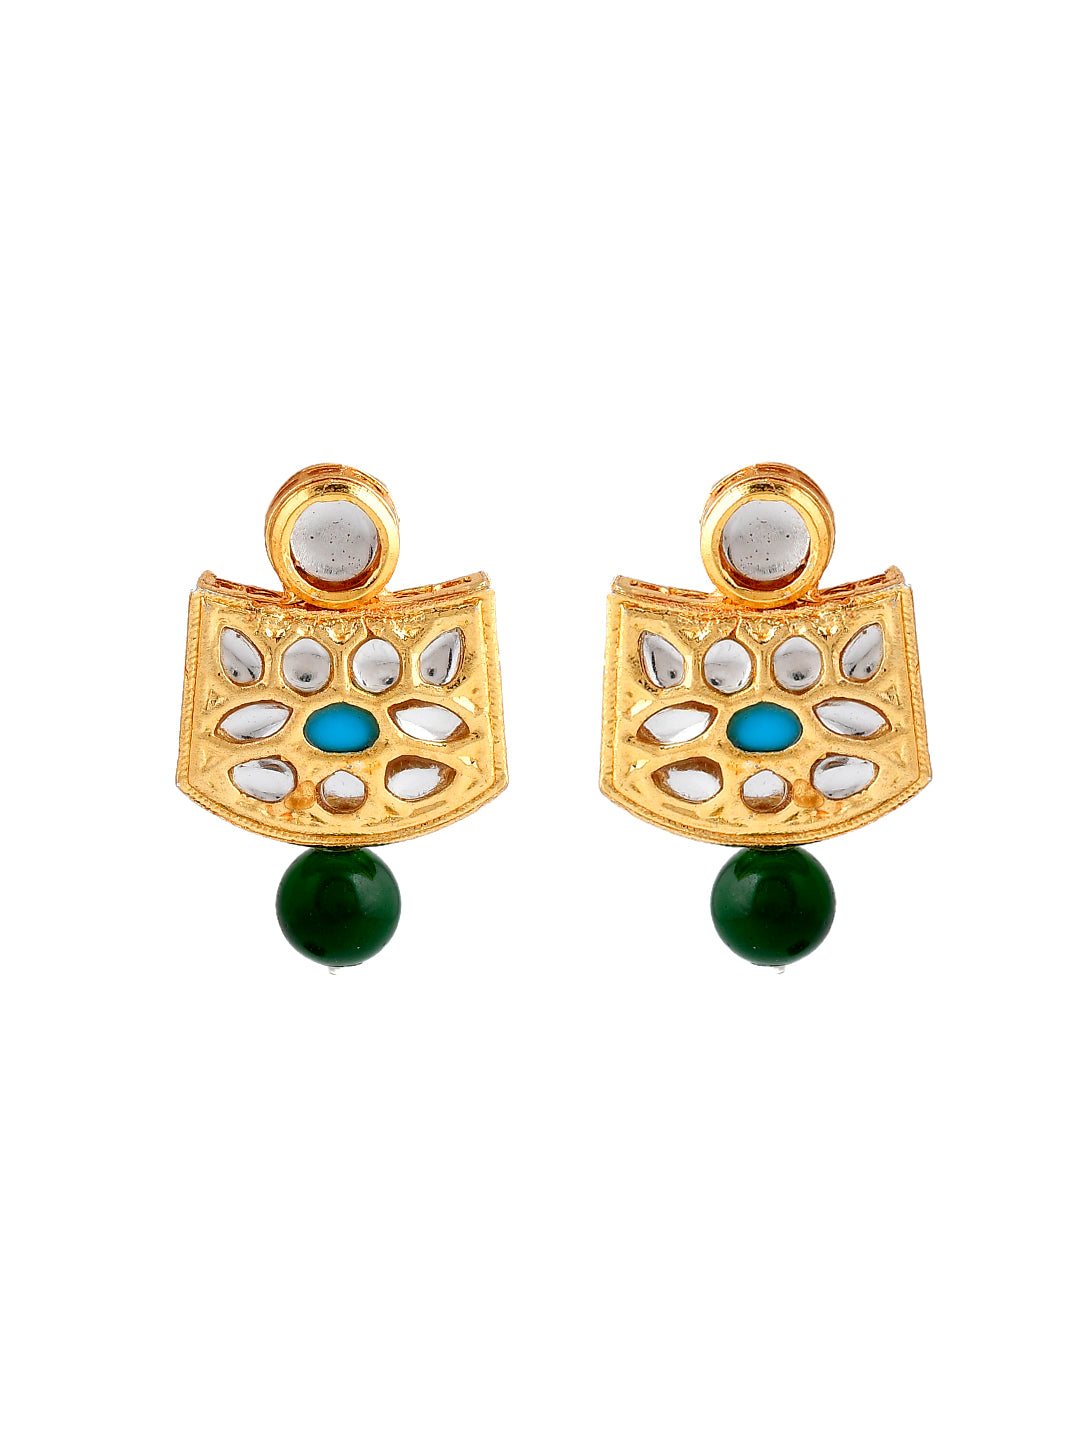 Kundan Green Bead Jewellery Set